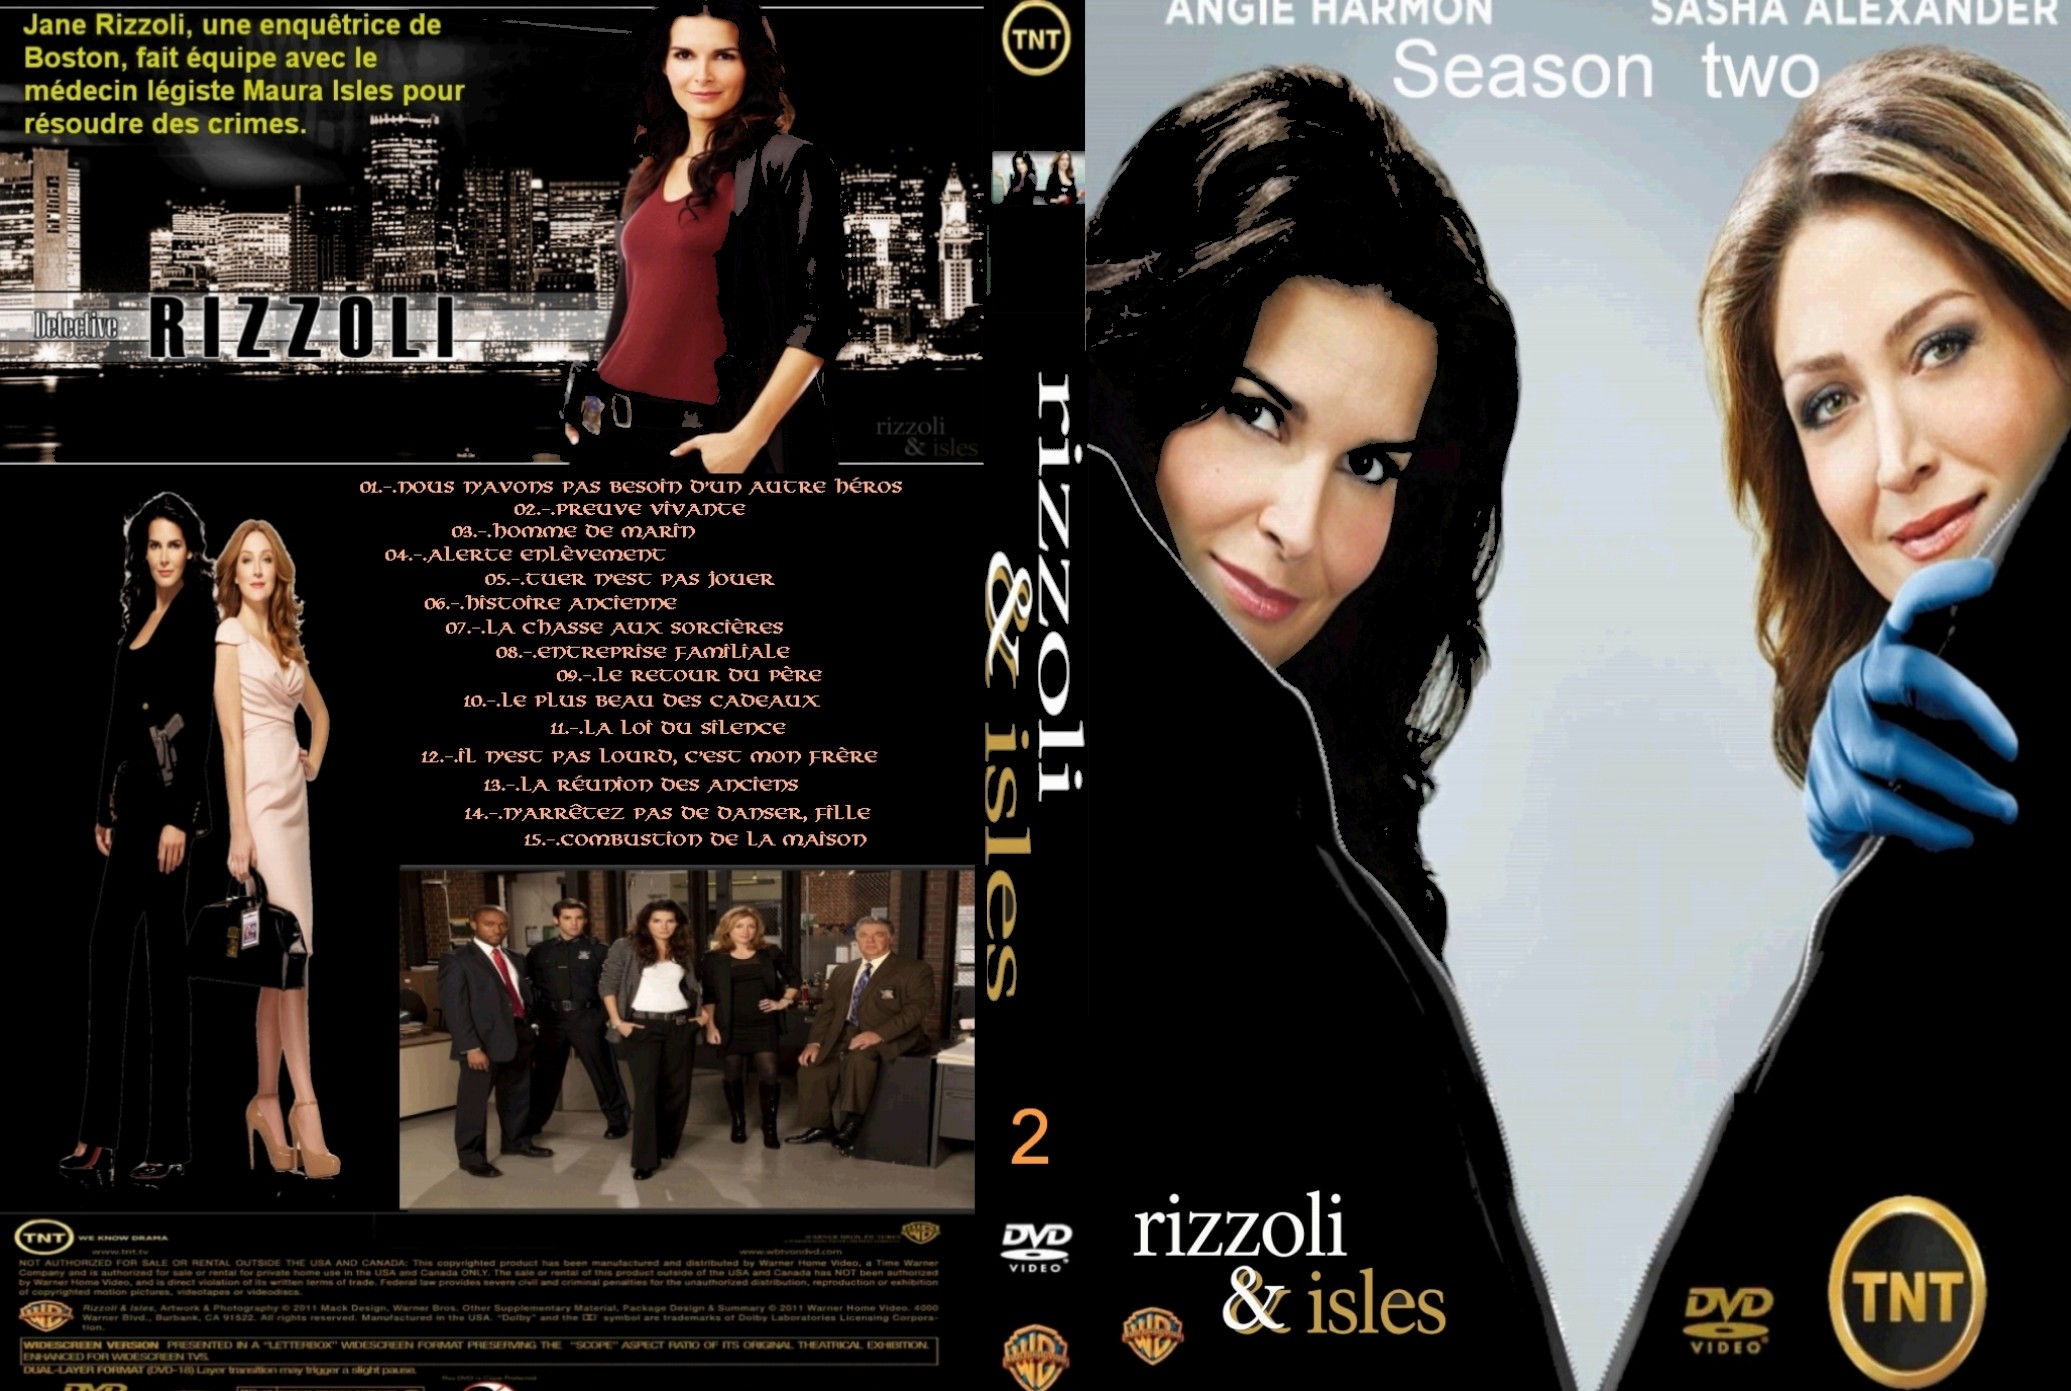 Jaquette DVD Rizzoli & Isles Saison 2 custom